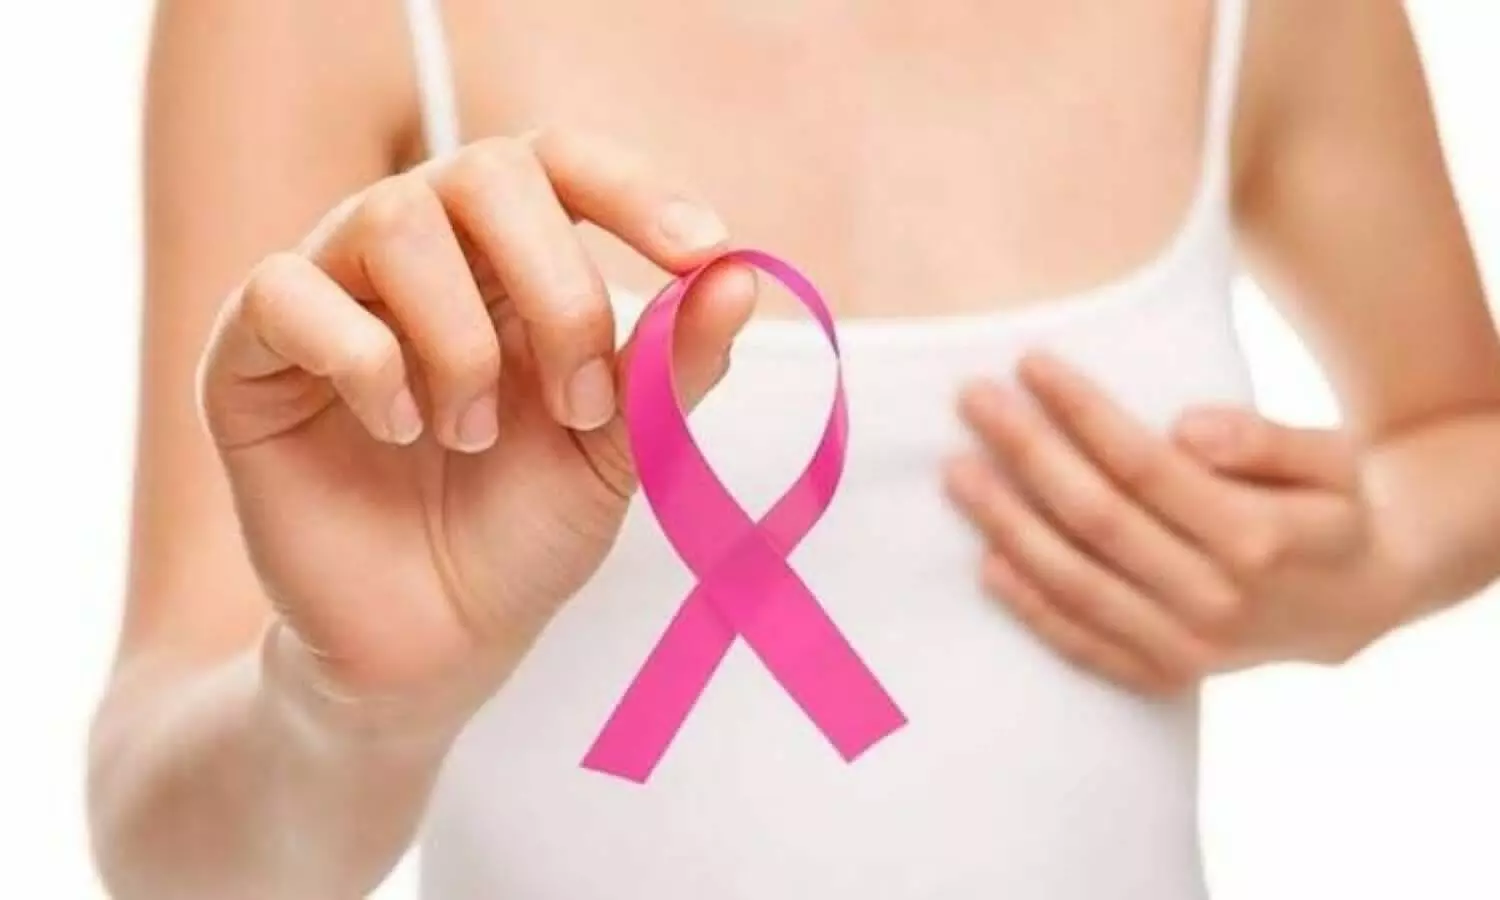 Breast Cancer symptoms